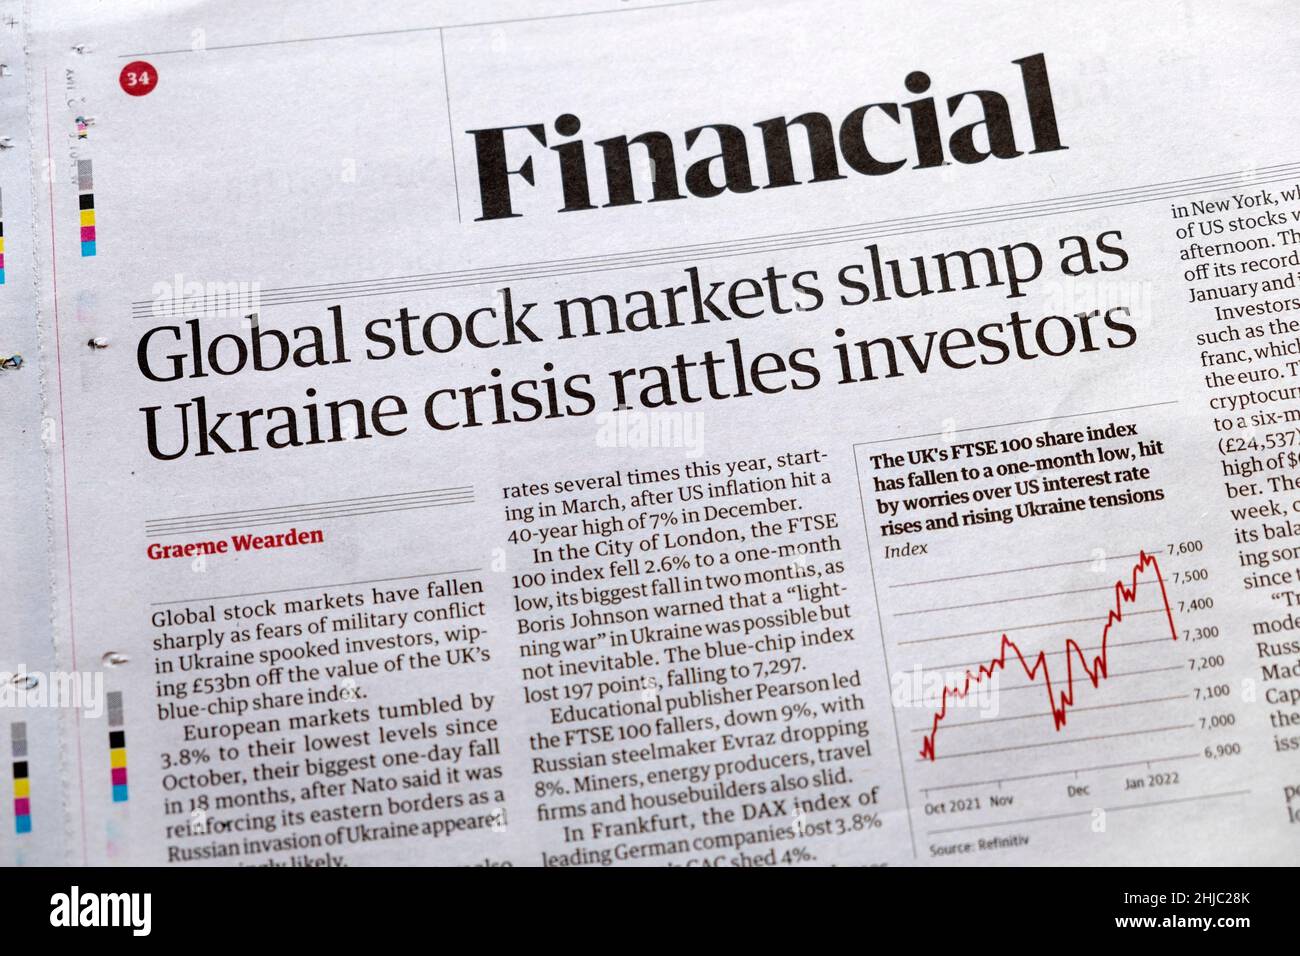 'Global stock markets slump as Ukraine crisis rattles investors'  Financial page of Guardian newspaper headline 24 January 2022 in London UK Stock Photo